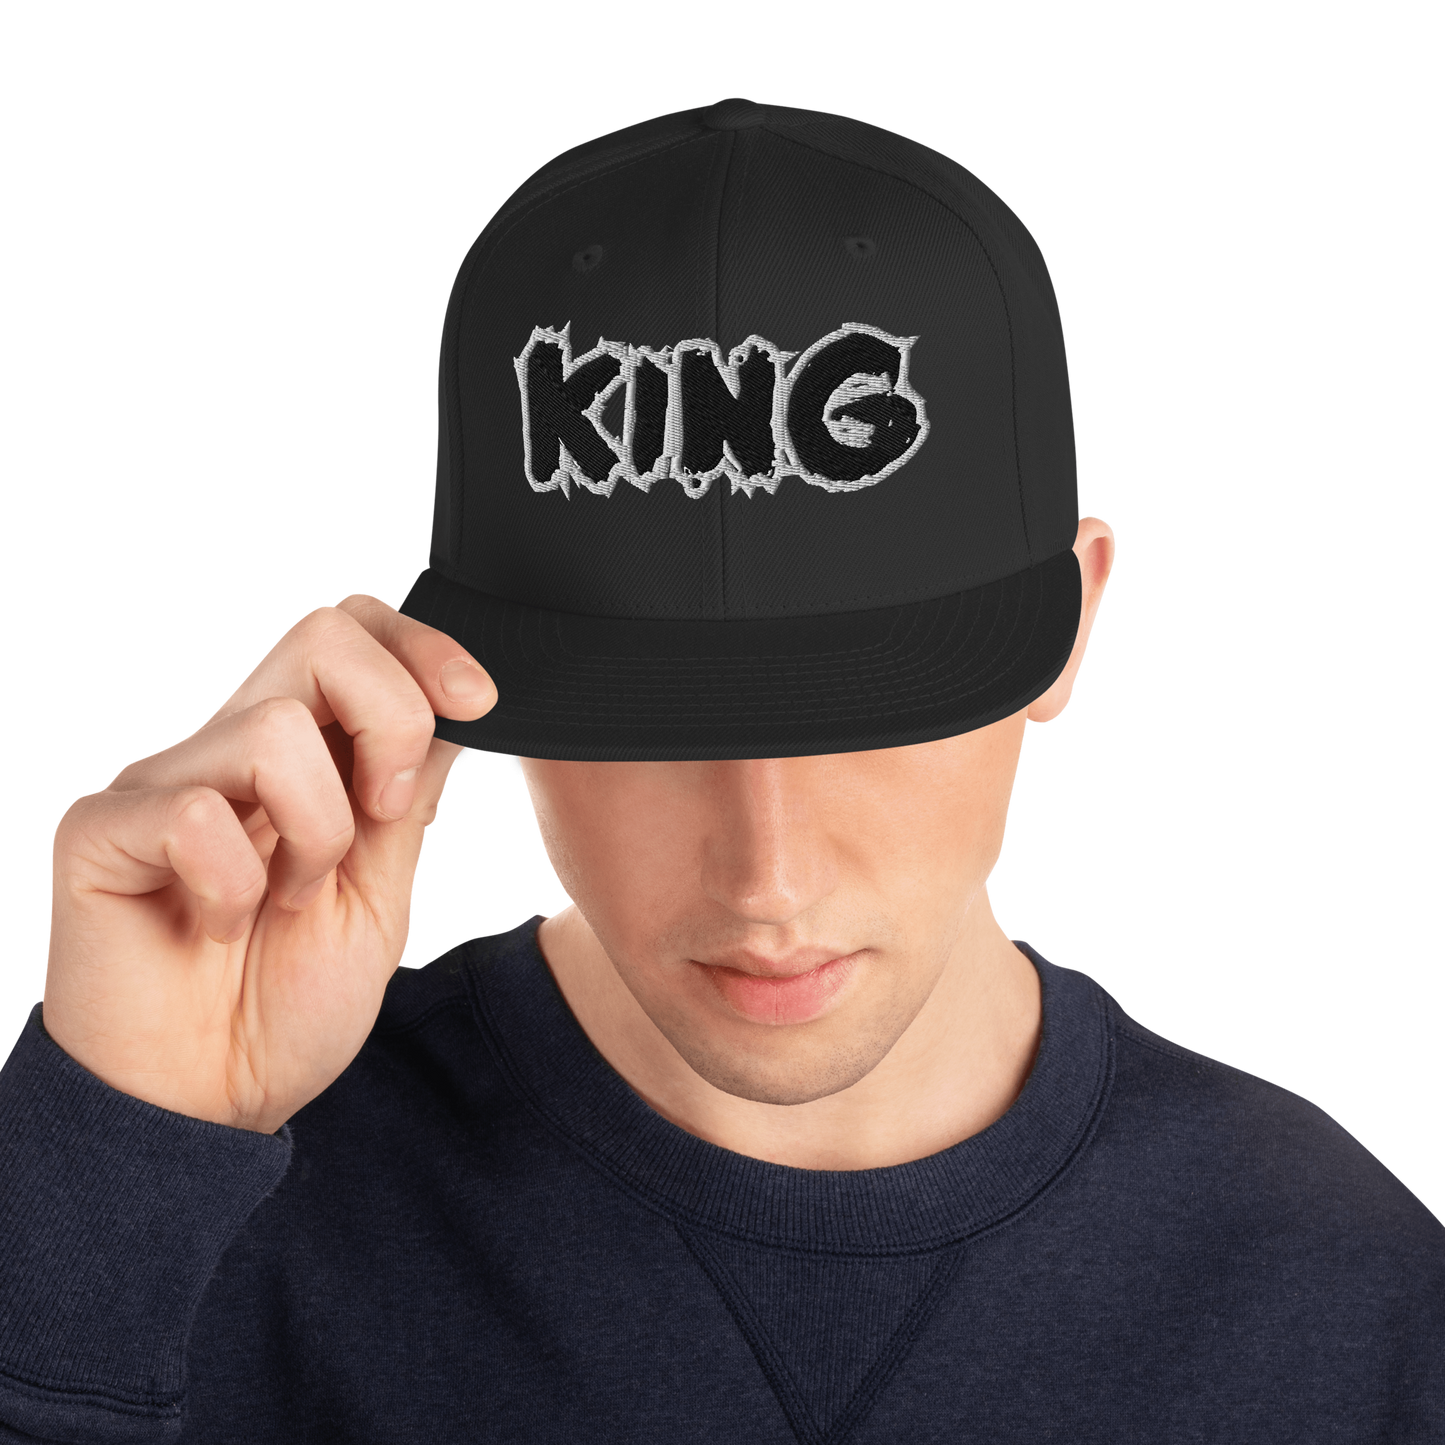 KING Snapback hat